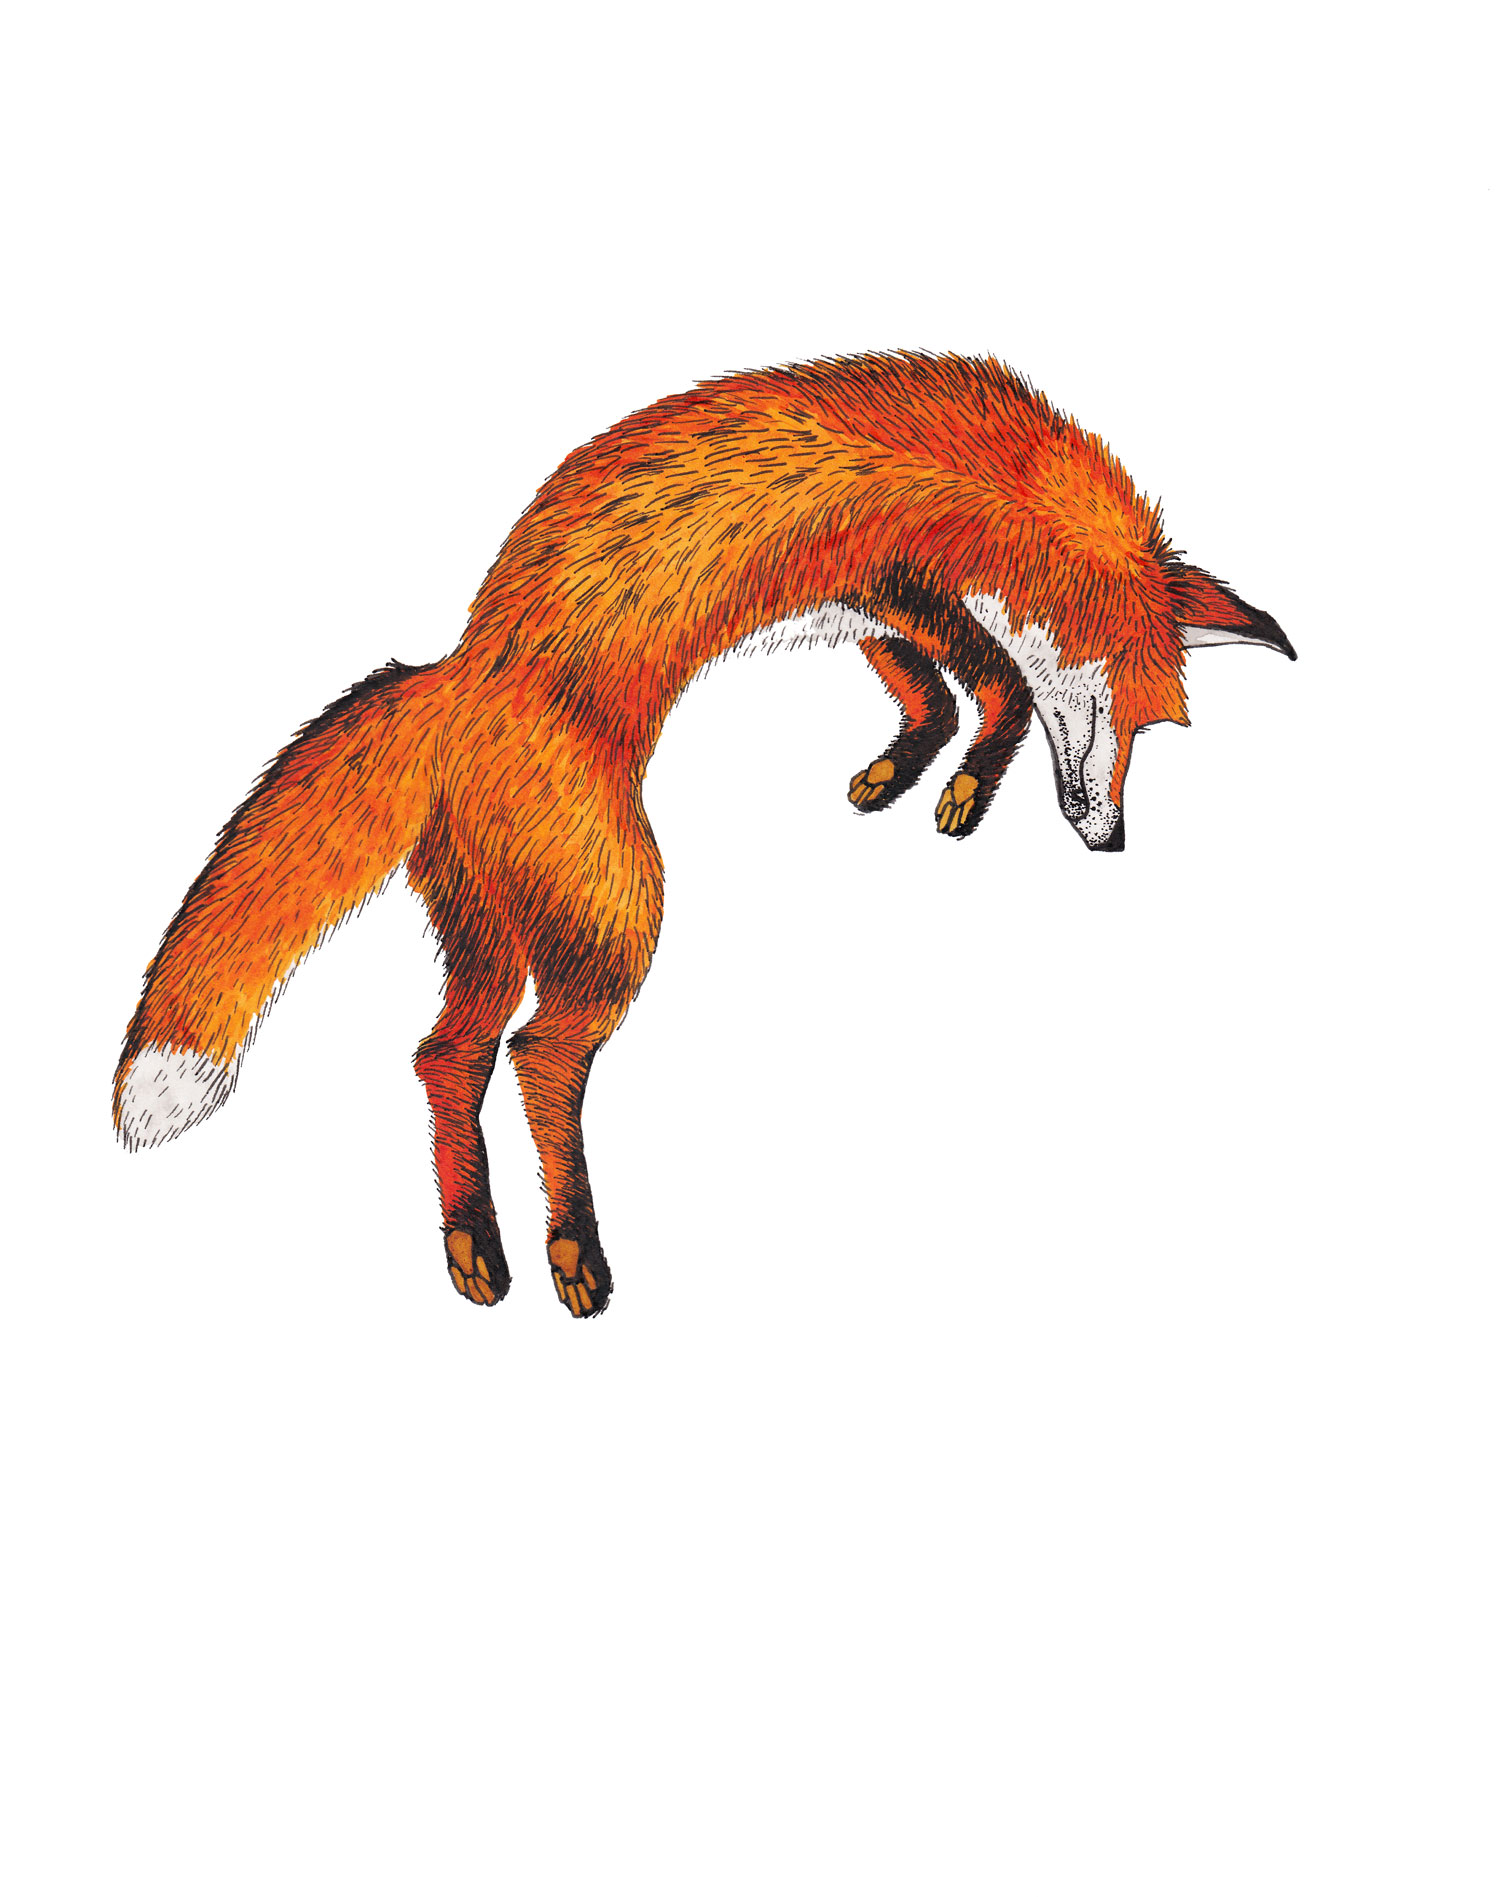 red-fox-leaping-illustration-matthew-woods.jpg